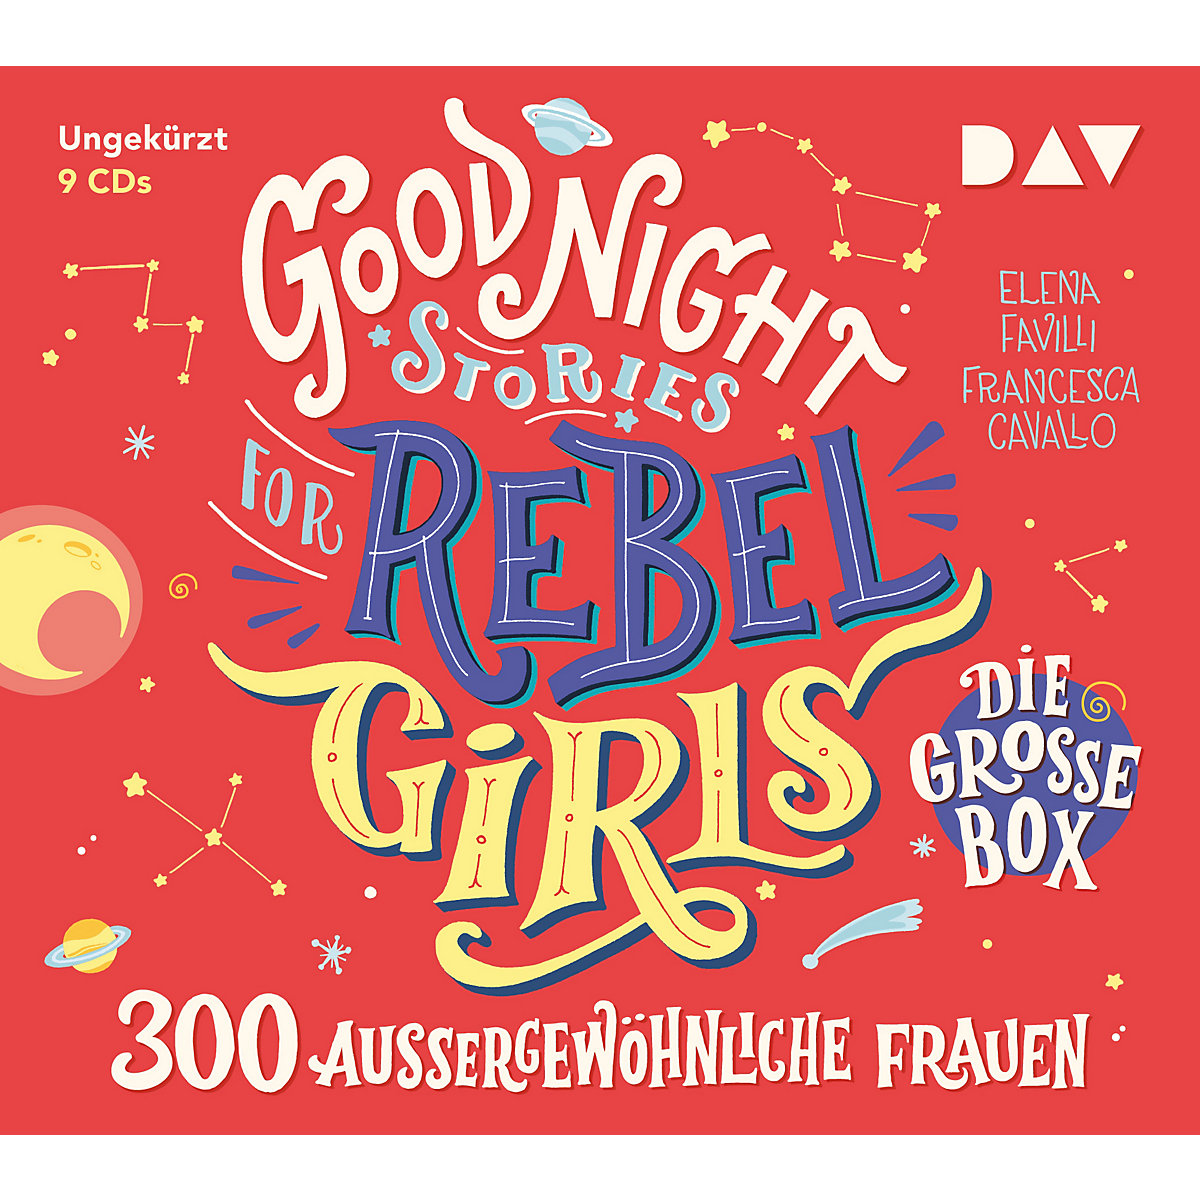 Good Night Stories for Rebel Girls Die große Box (9 CDs) 9 Audio-CD